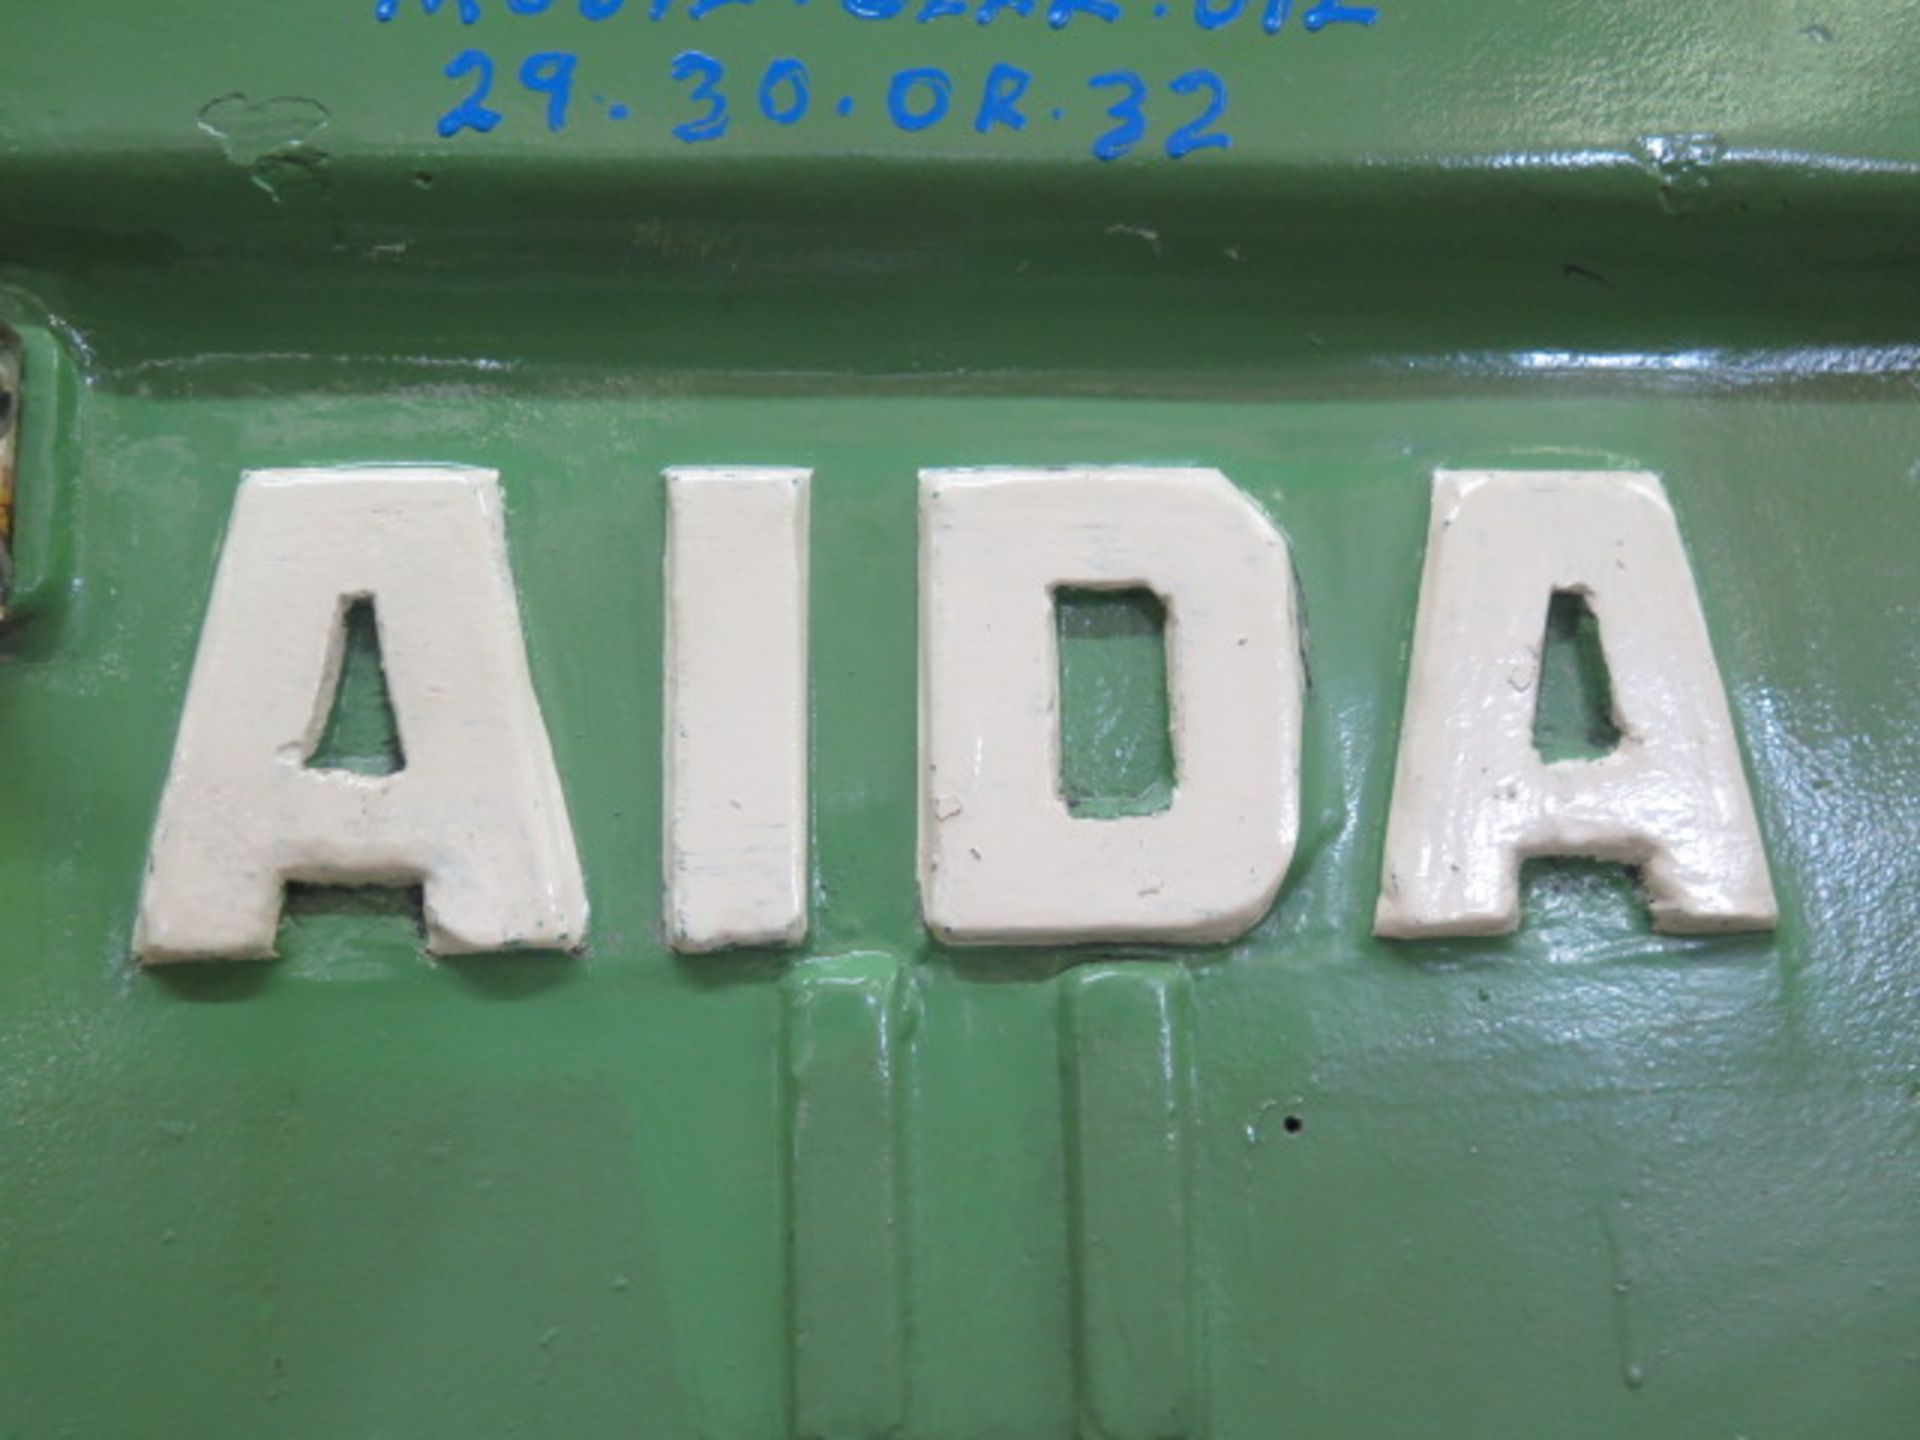 Aida C2-11(2) 110 Ton Hydfraulic Gap Frame Stamping Press s/n 10511-0454 w/Aida Controls, SOLD AS IS - Image 16 of 18